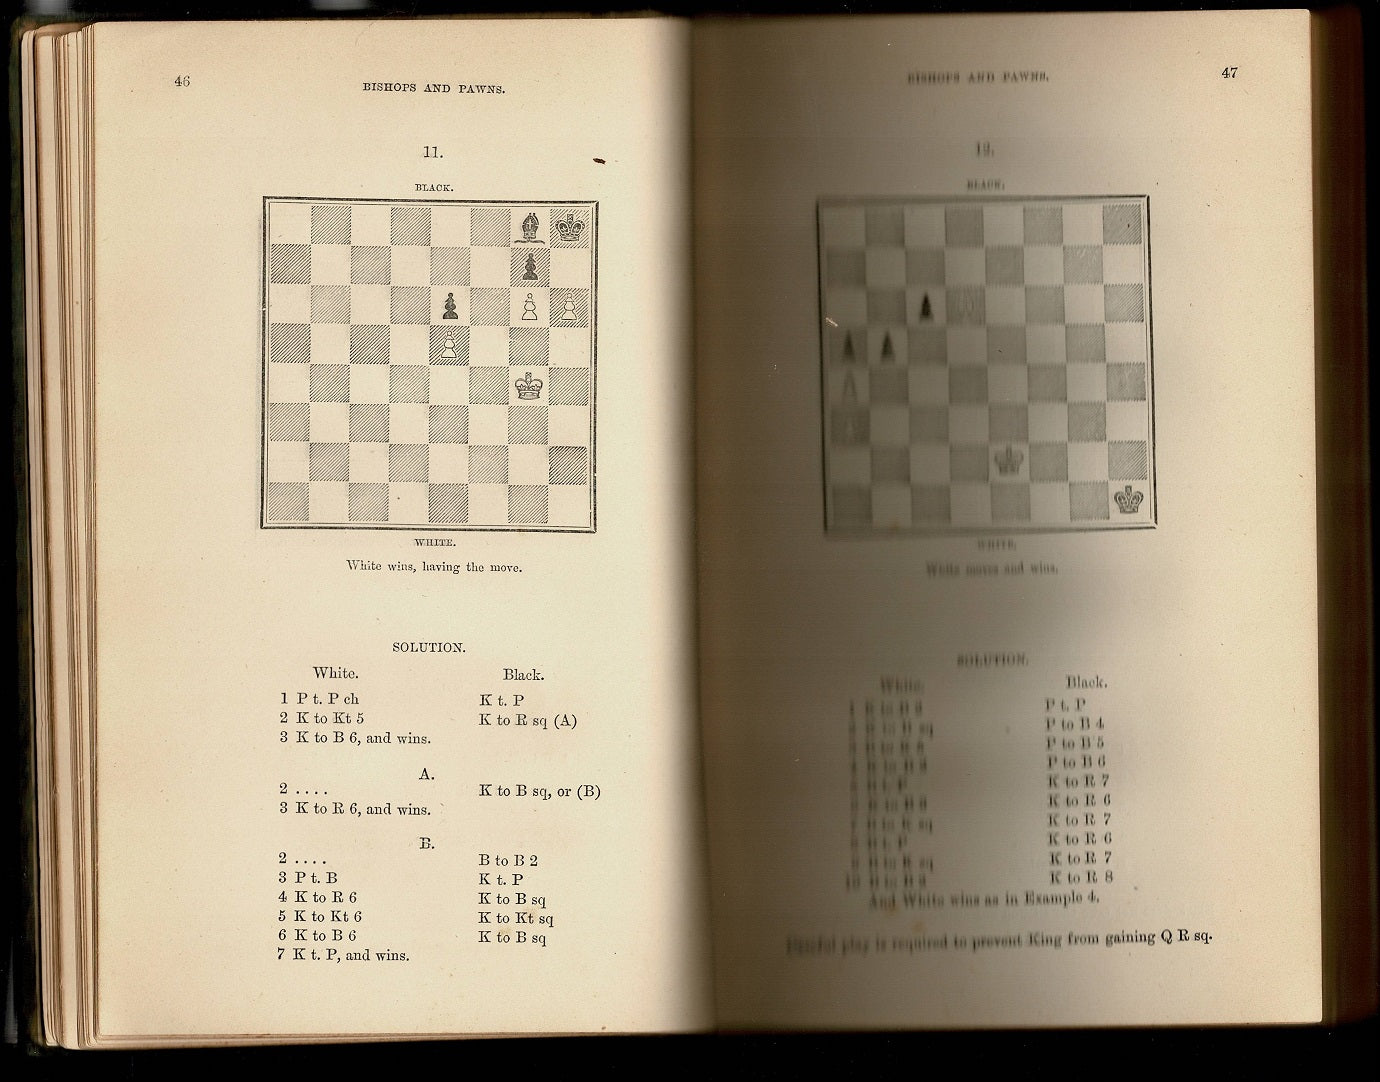 The Best Chess Games of Bernhard Horwitz 